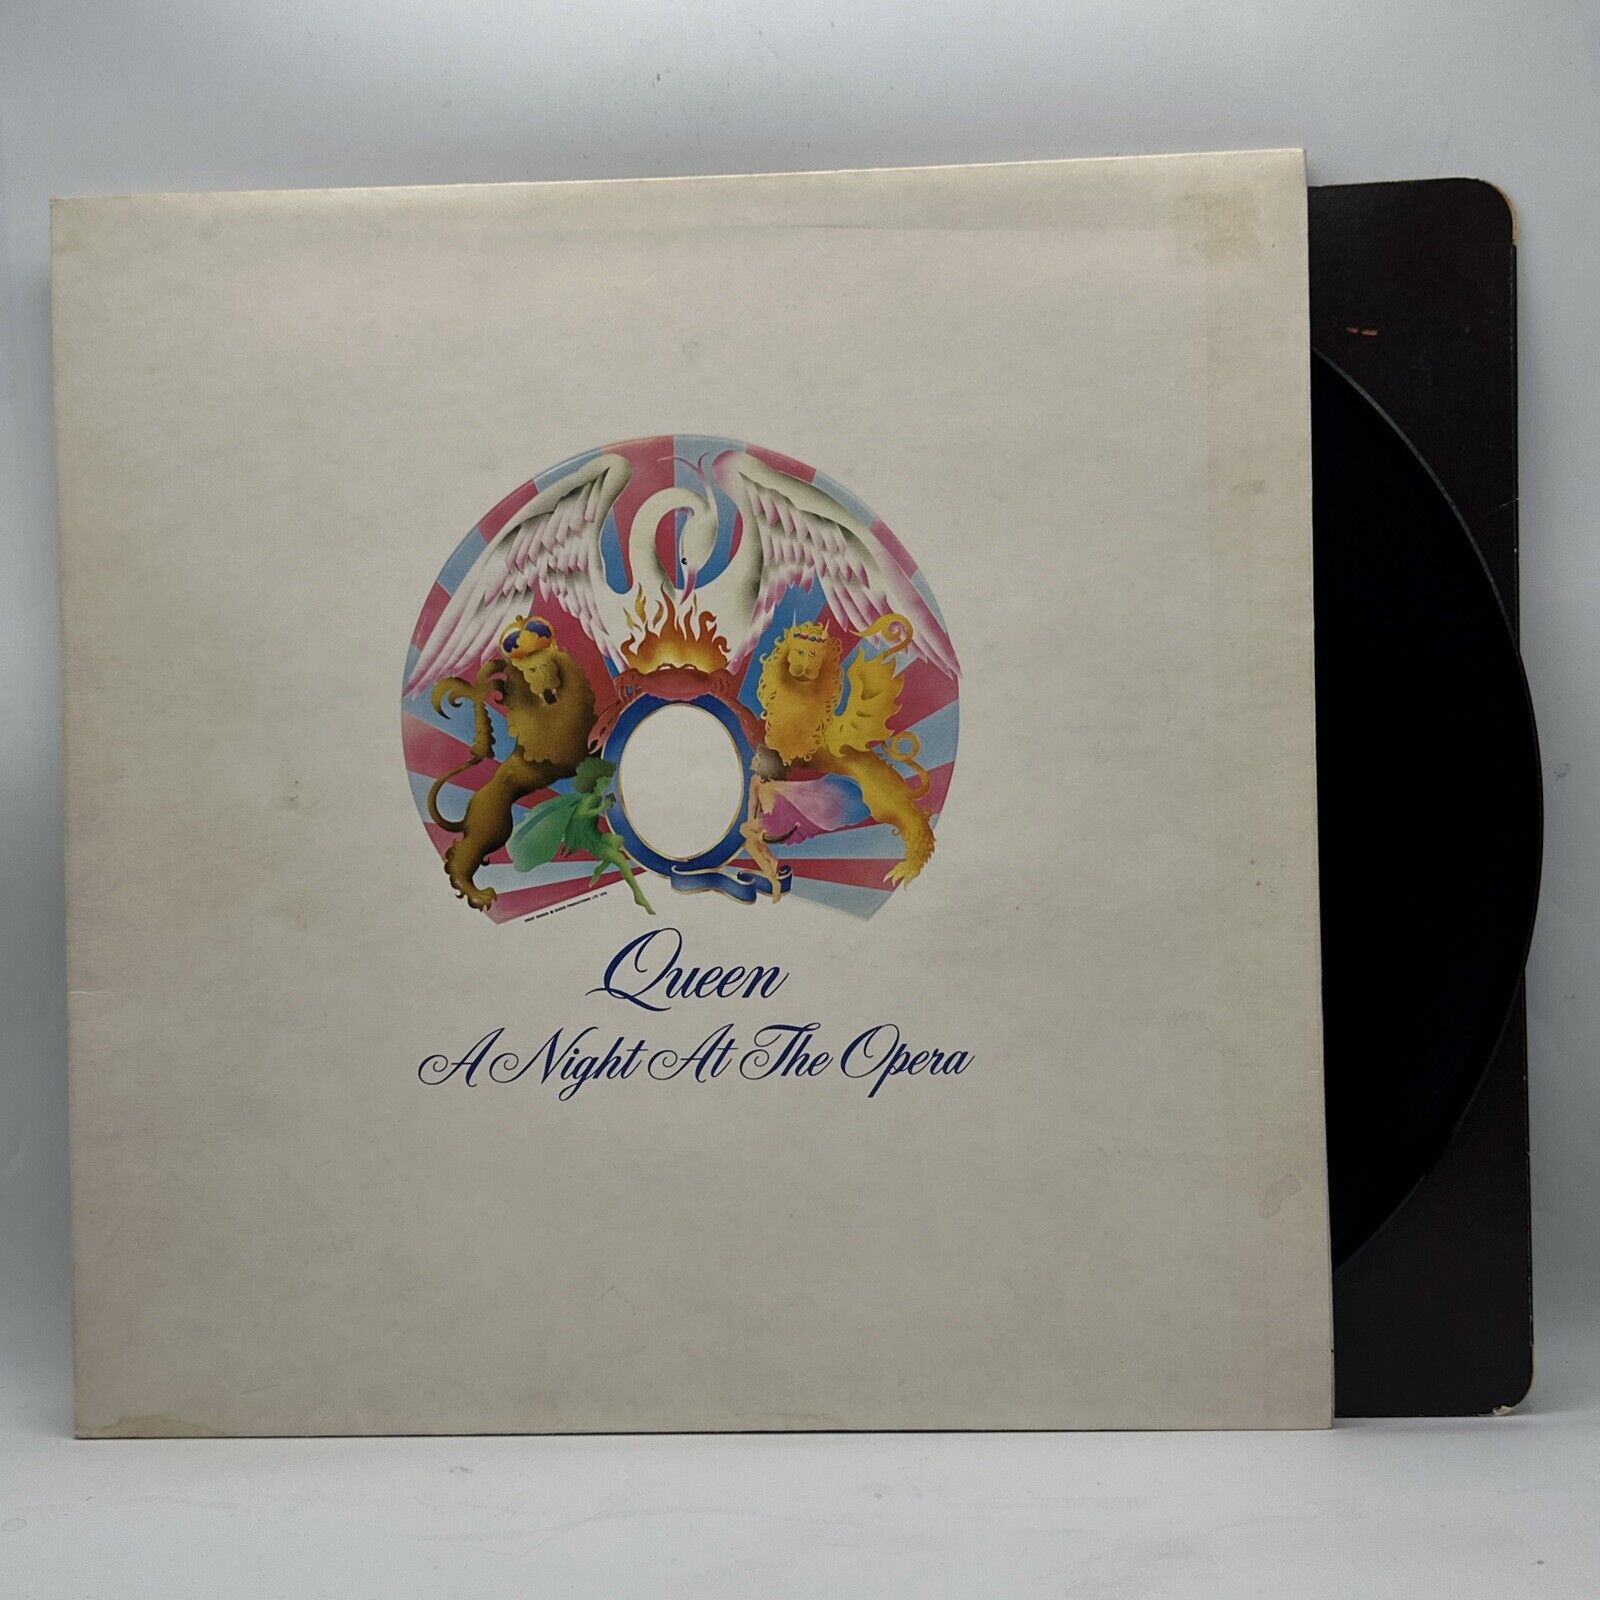 Queen - A Night At The Opera - 1975 UK Press Album (EX) Ultrasonic Clean